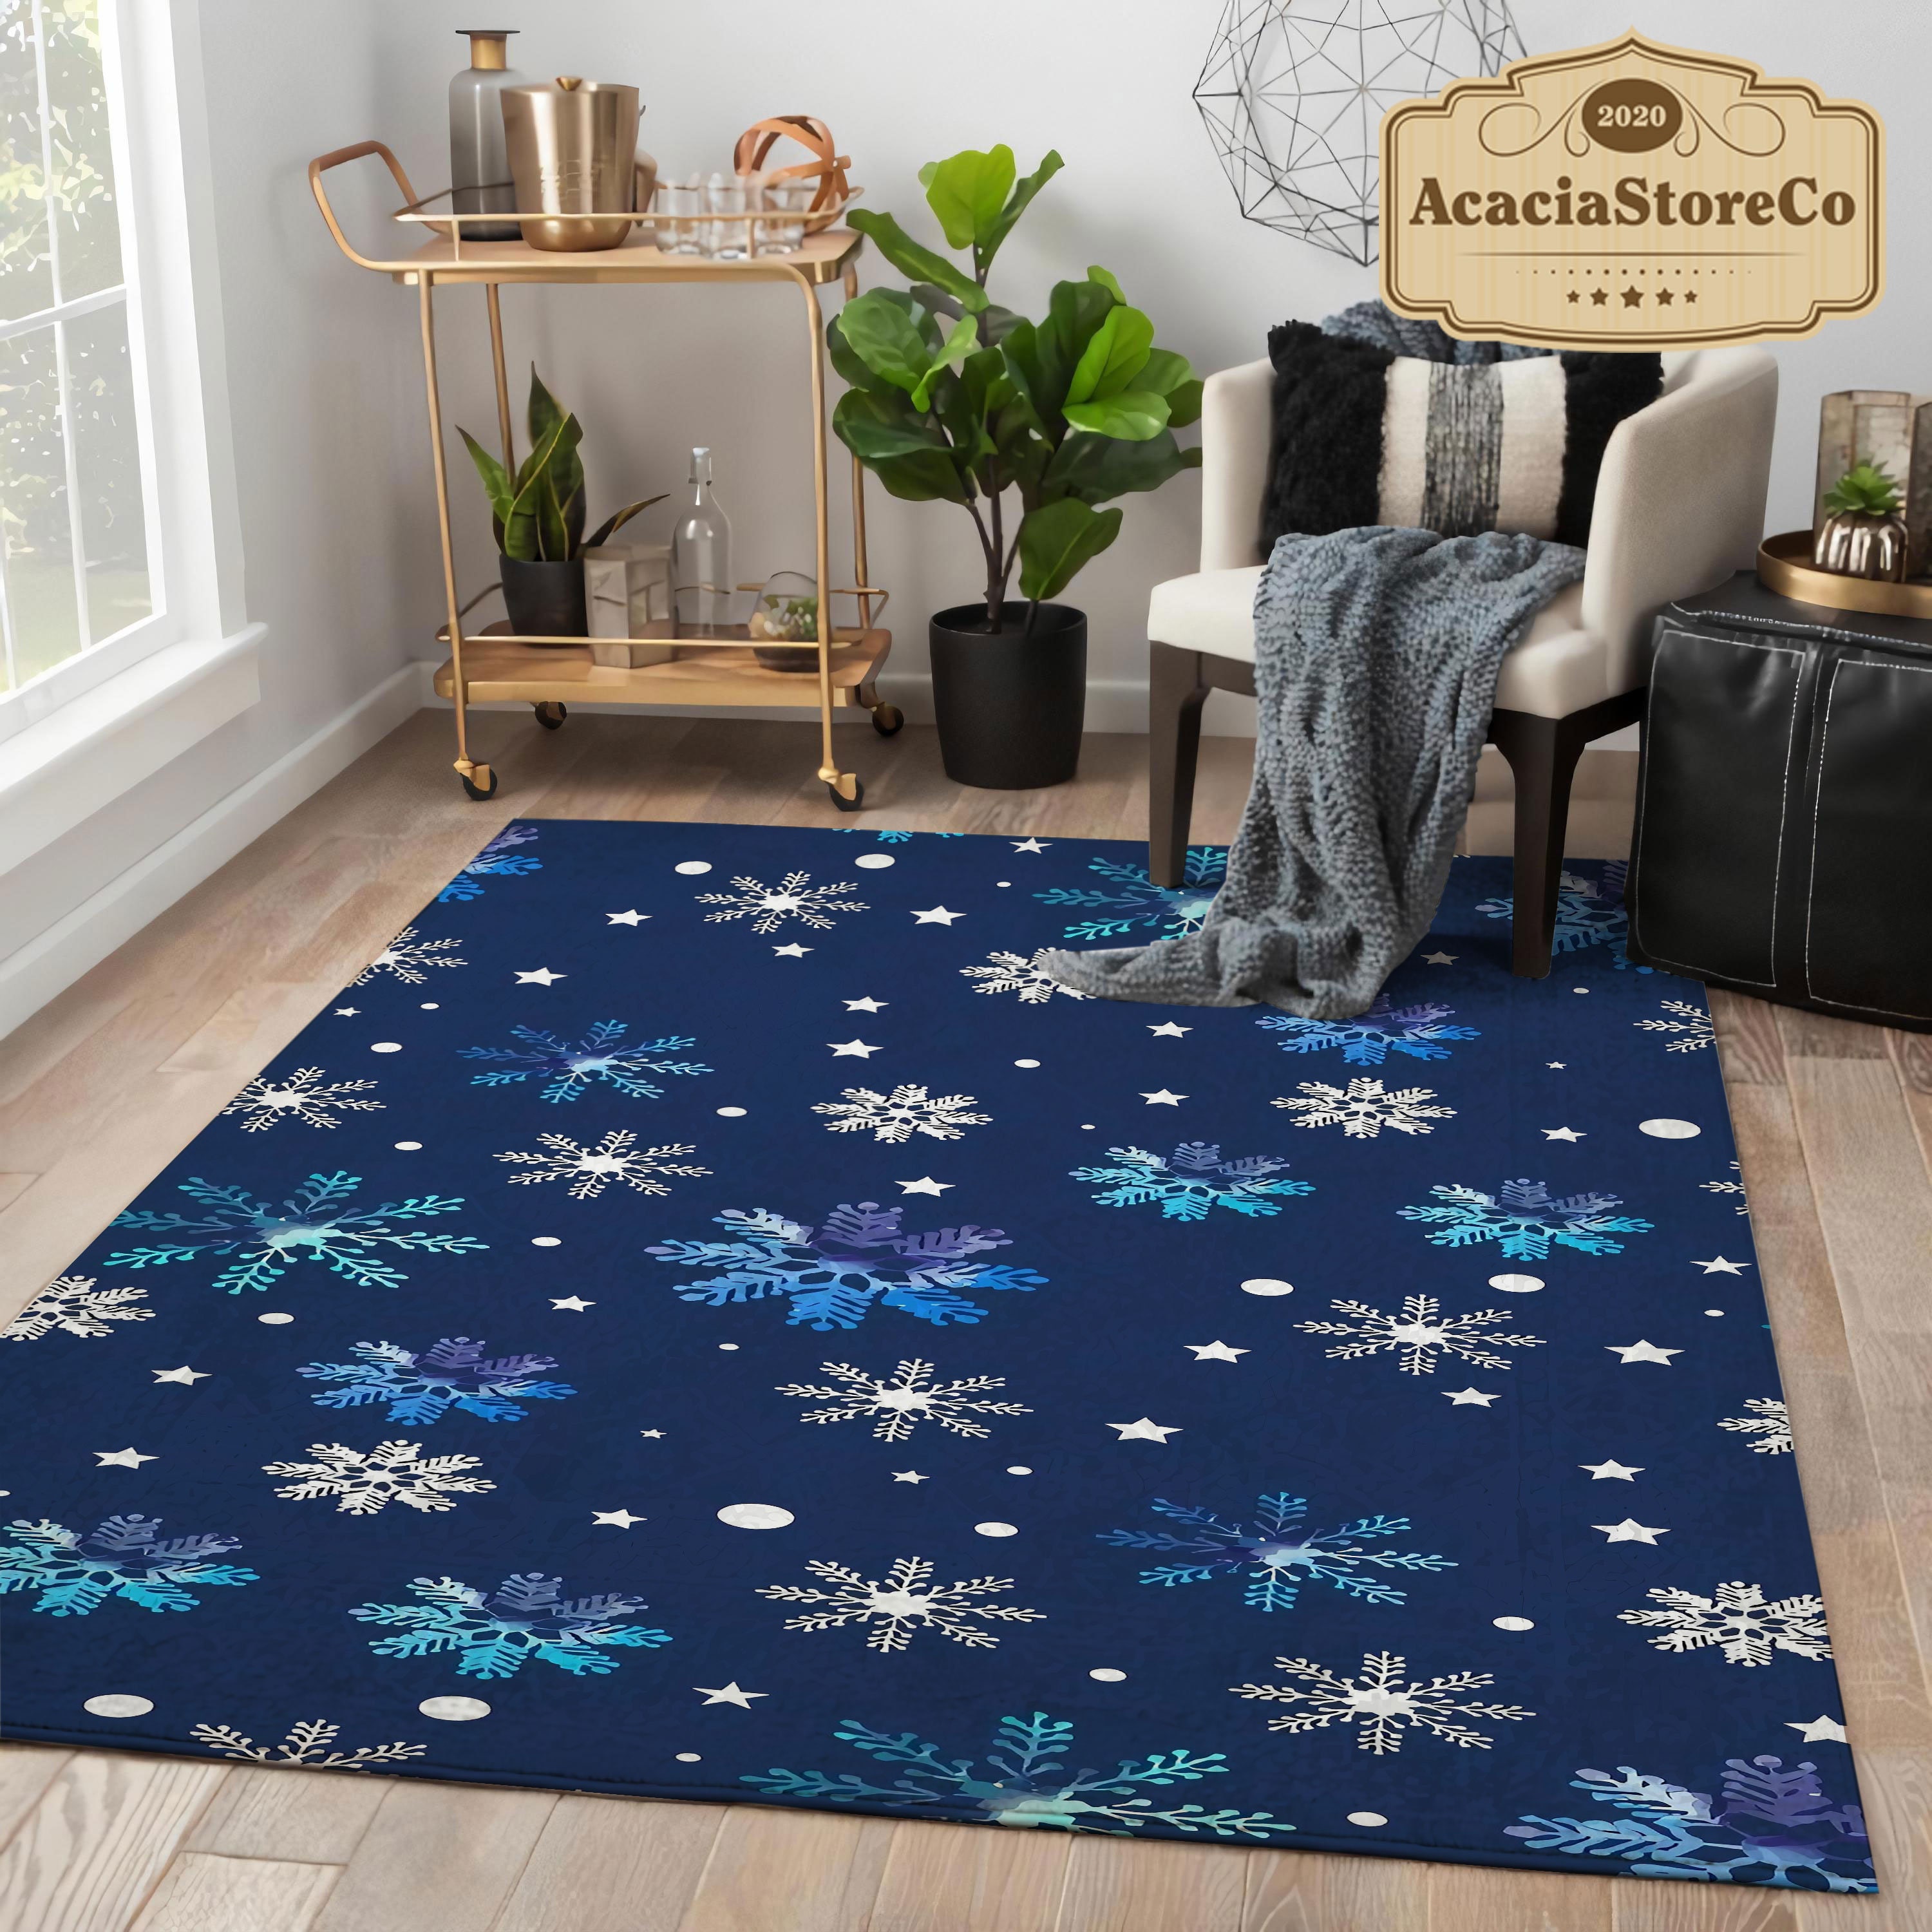 03C Snowflakes Stars Floor Mat, Vinyl Carpet, Christmas Floor